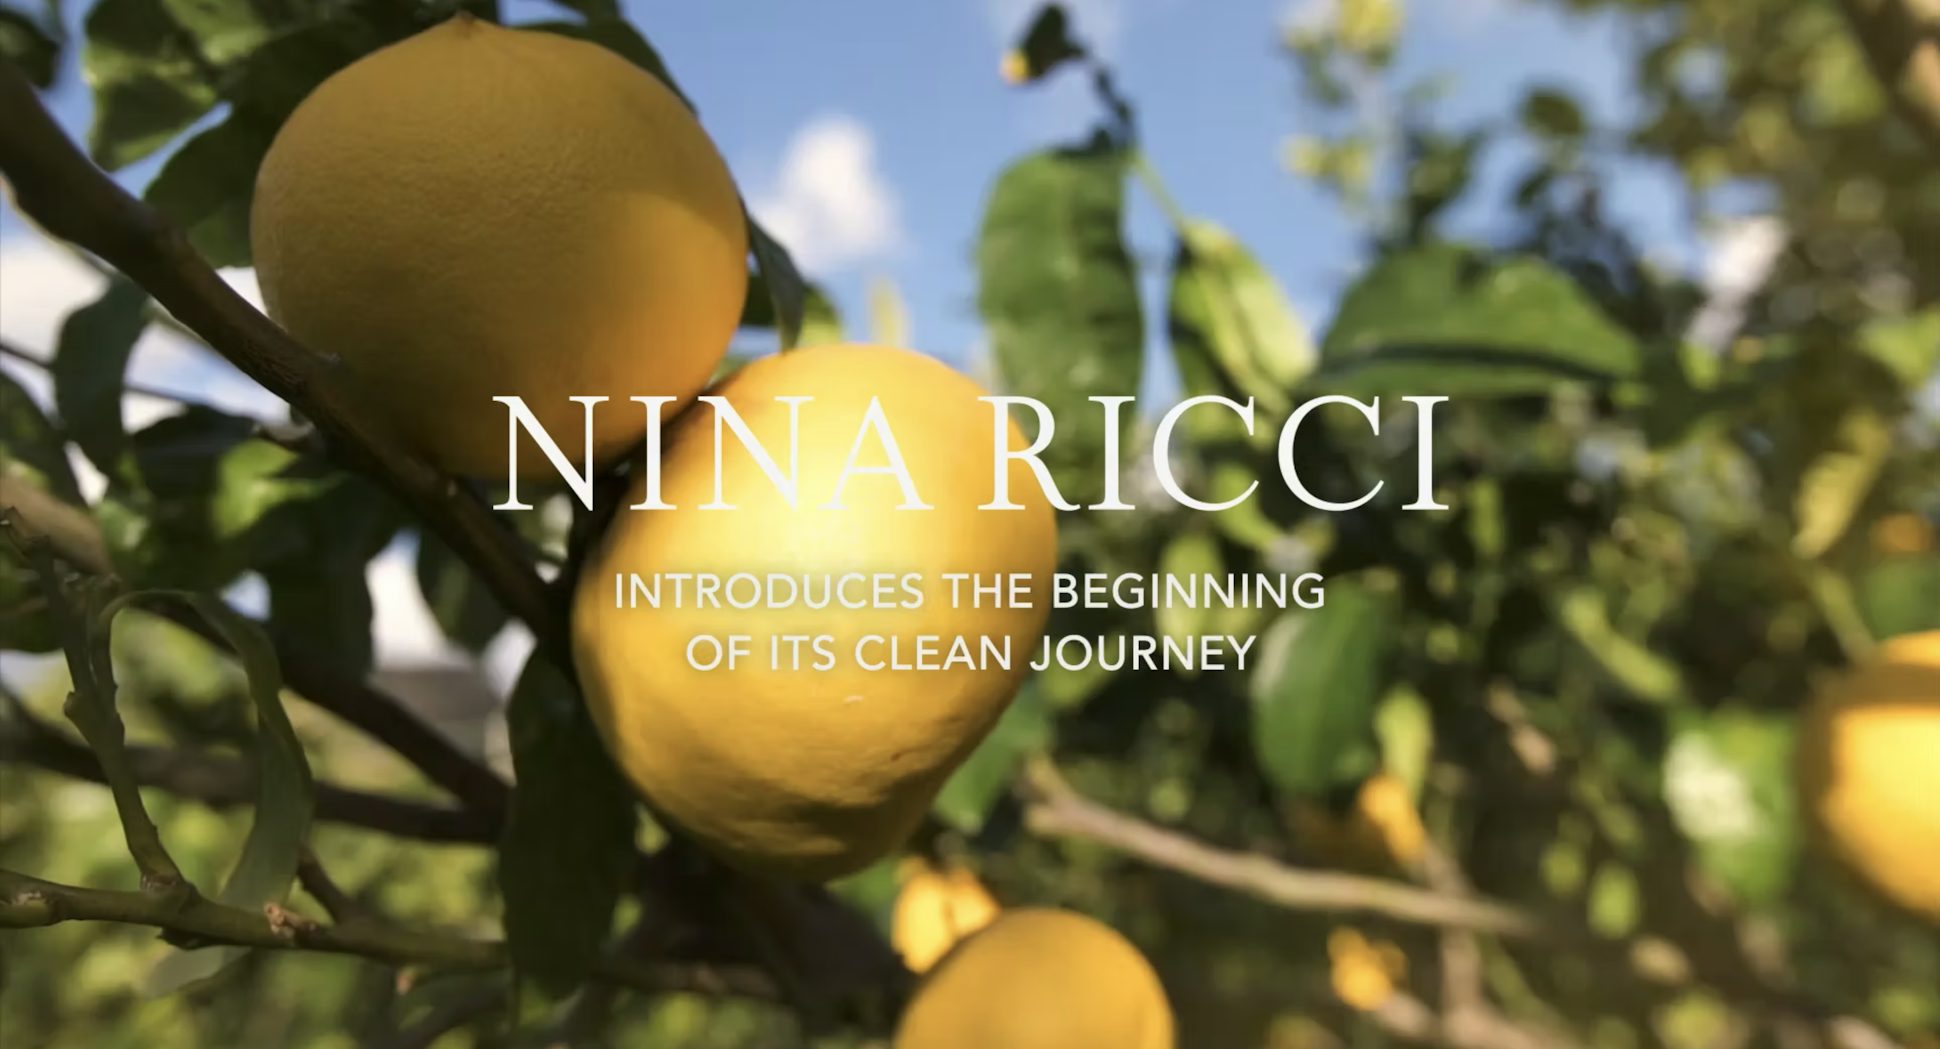 Corporate commitments - Nina Ricci